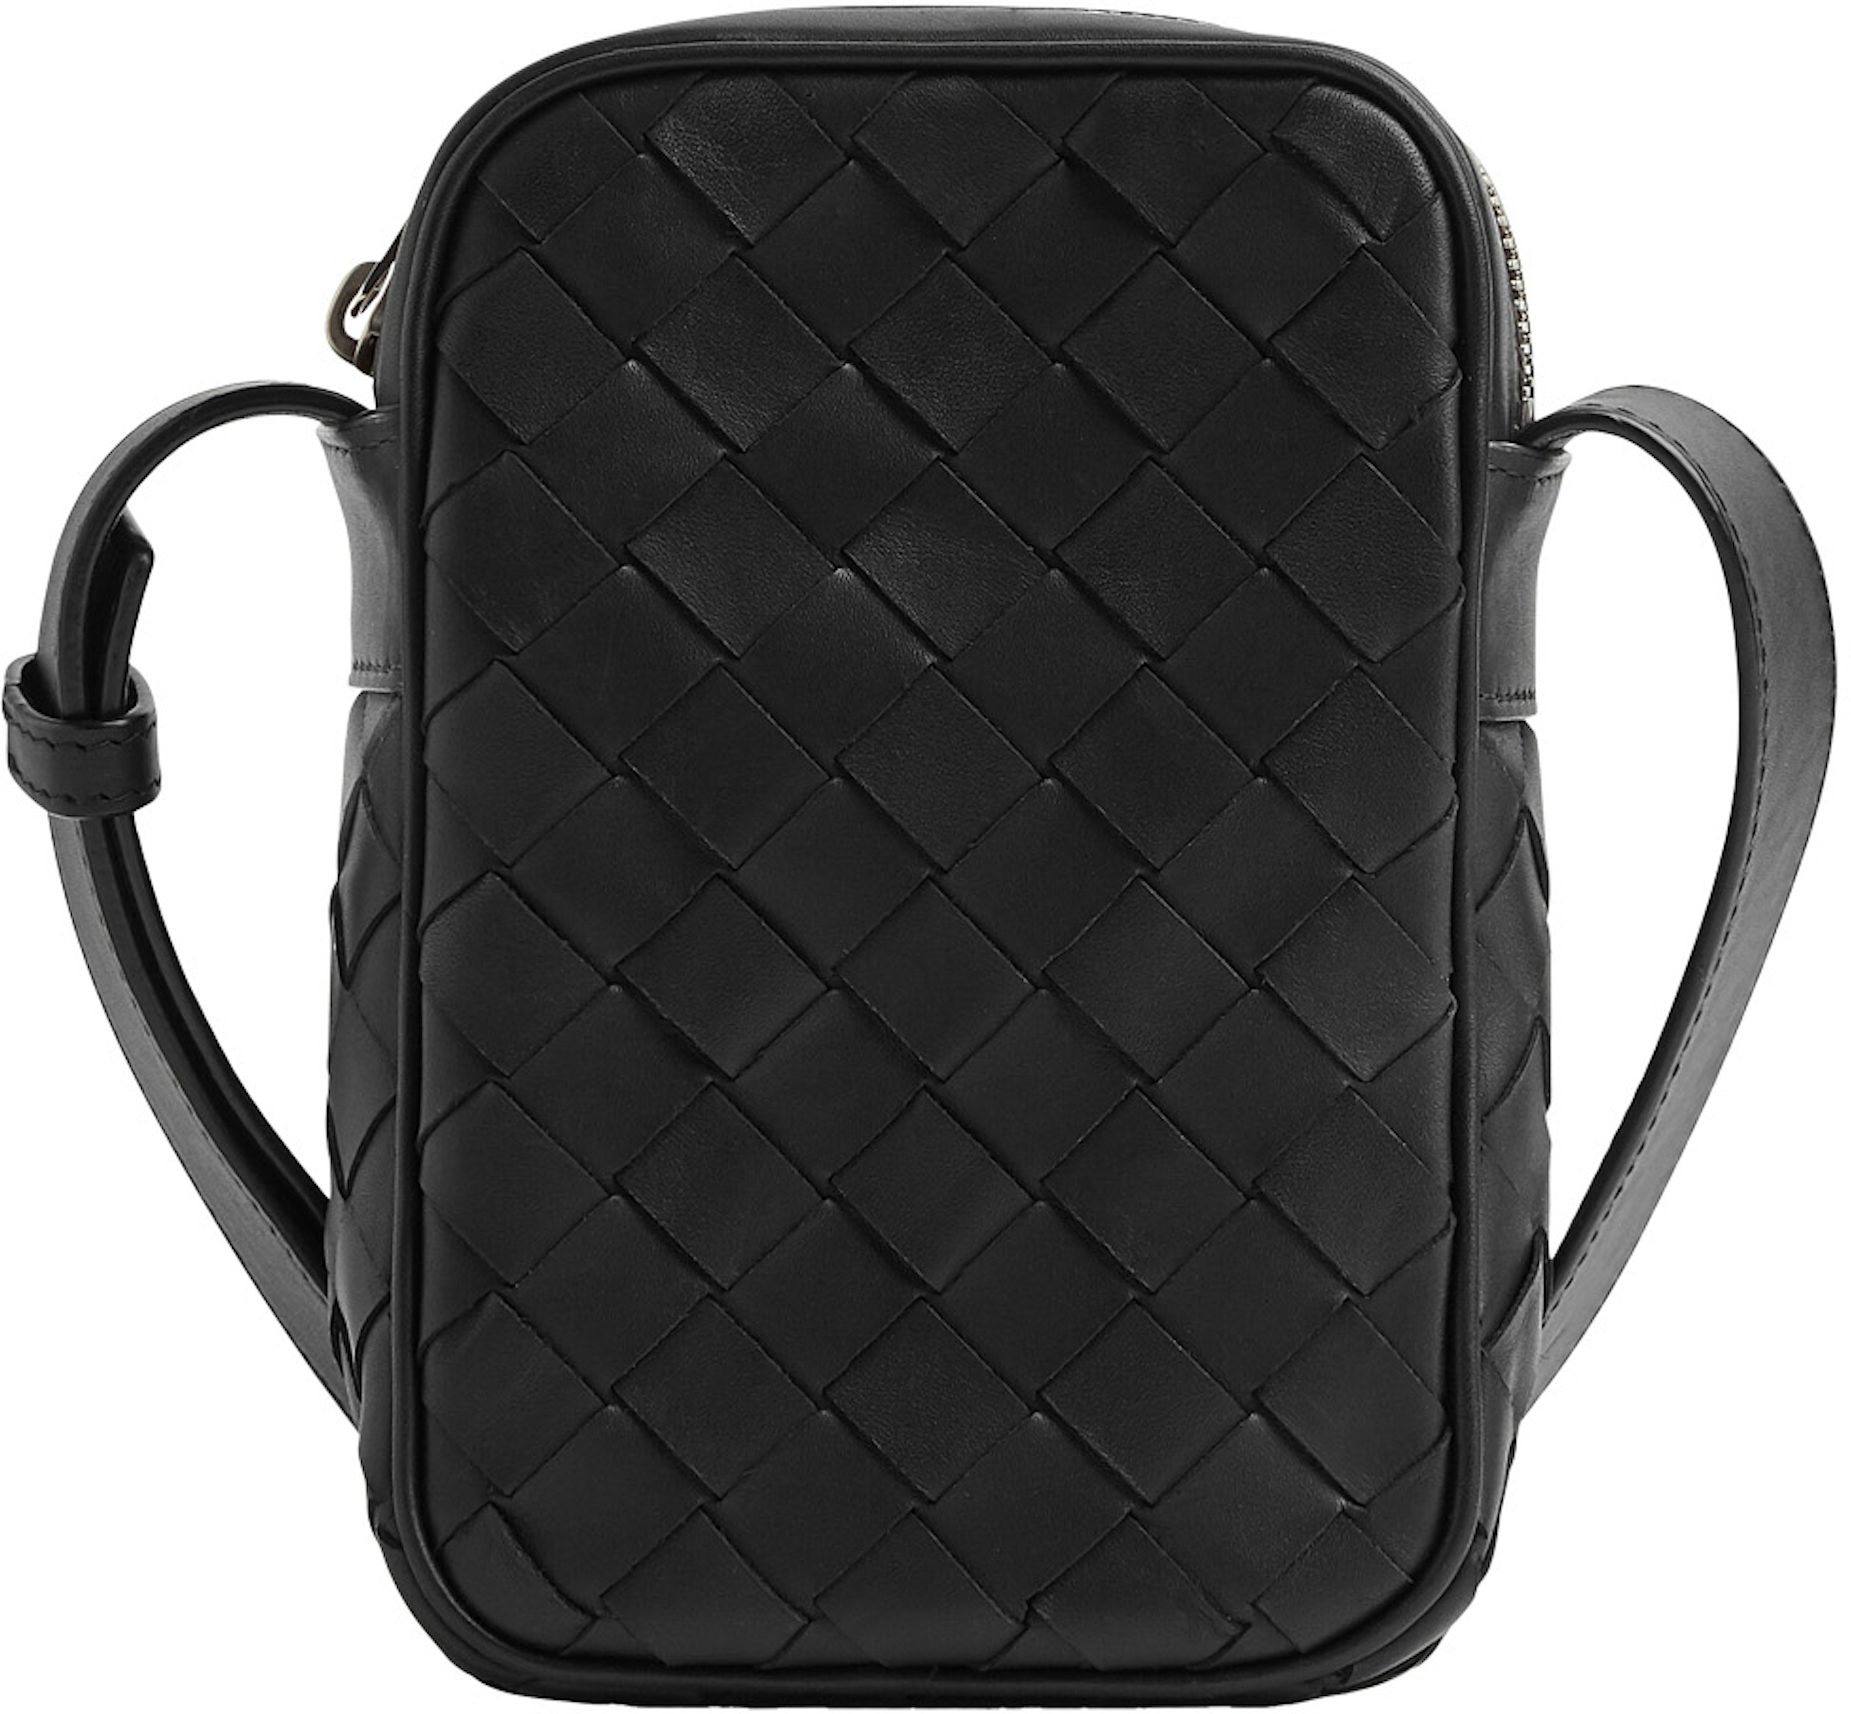 BOTTEGA VENETA: intrecciato leather smartphone case - Black